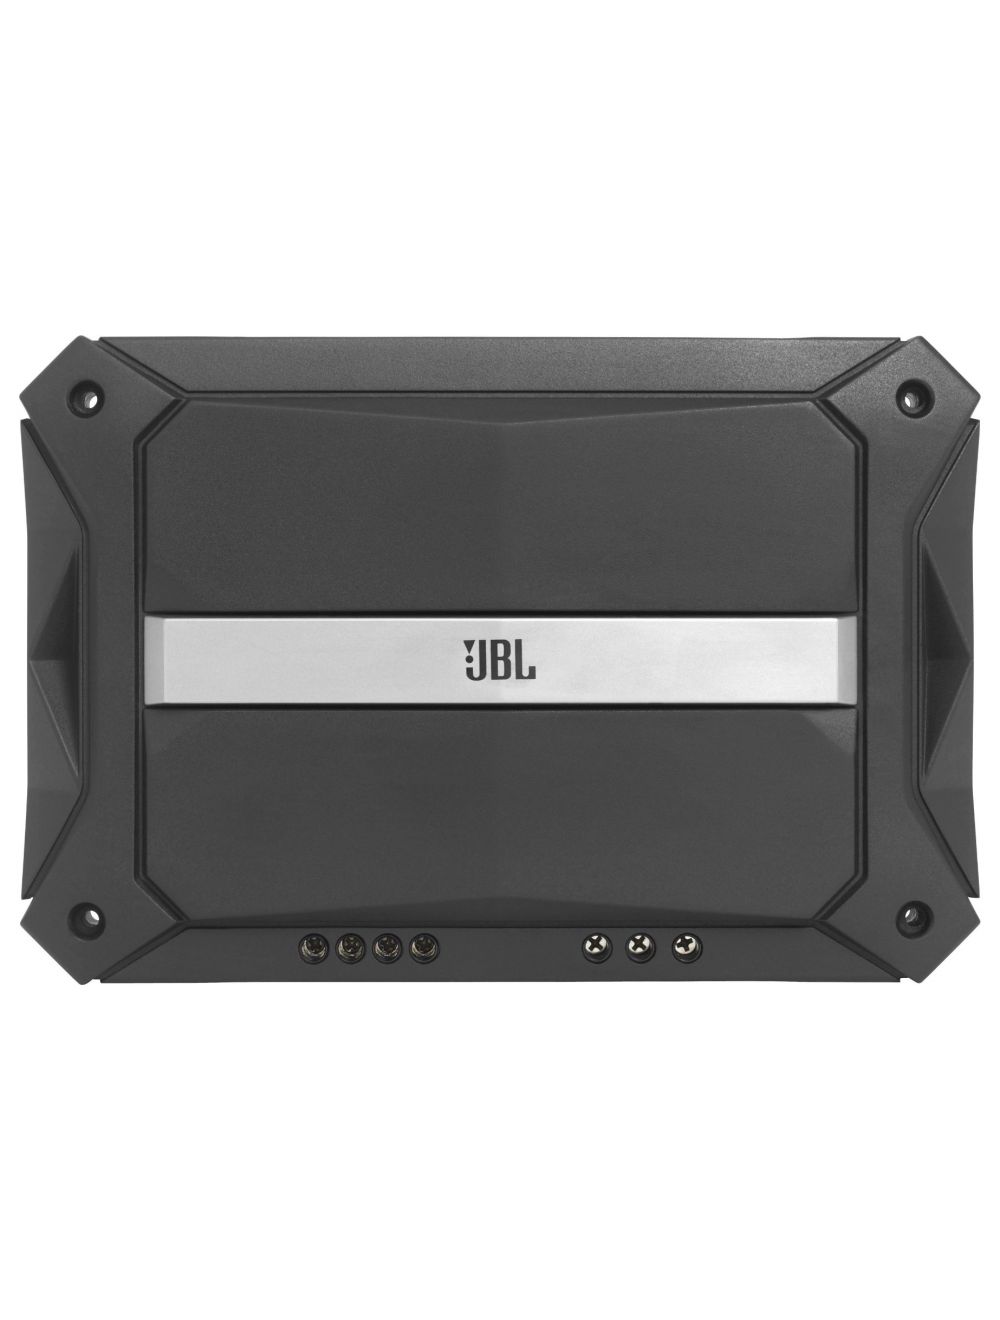 JBL STADIUM 600 Class D / 600w X 1w/Remote level control (STADIUM600) Amplifier